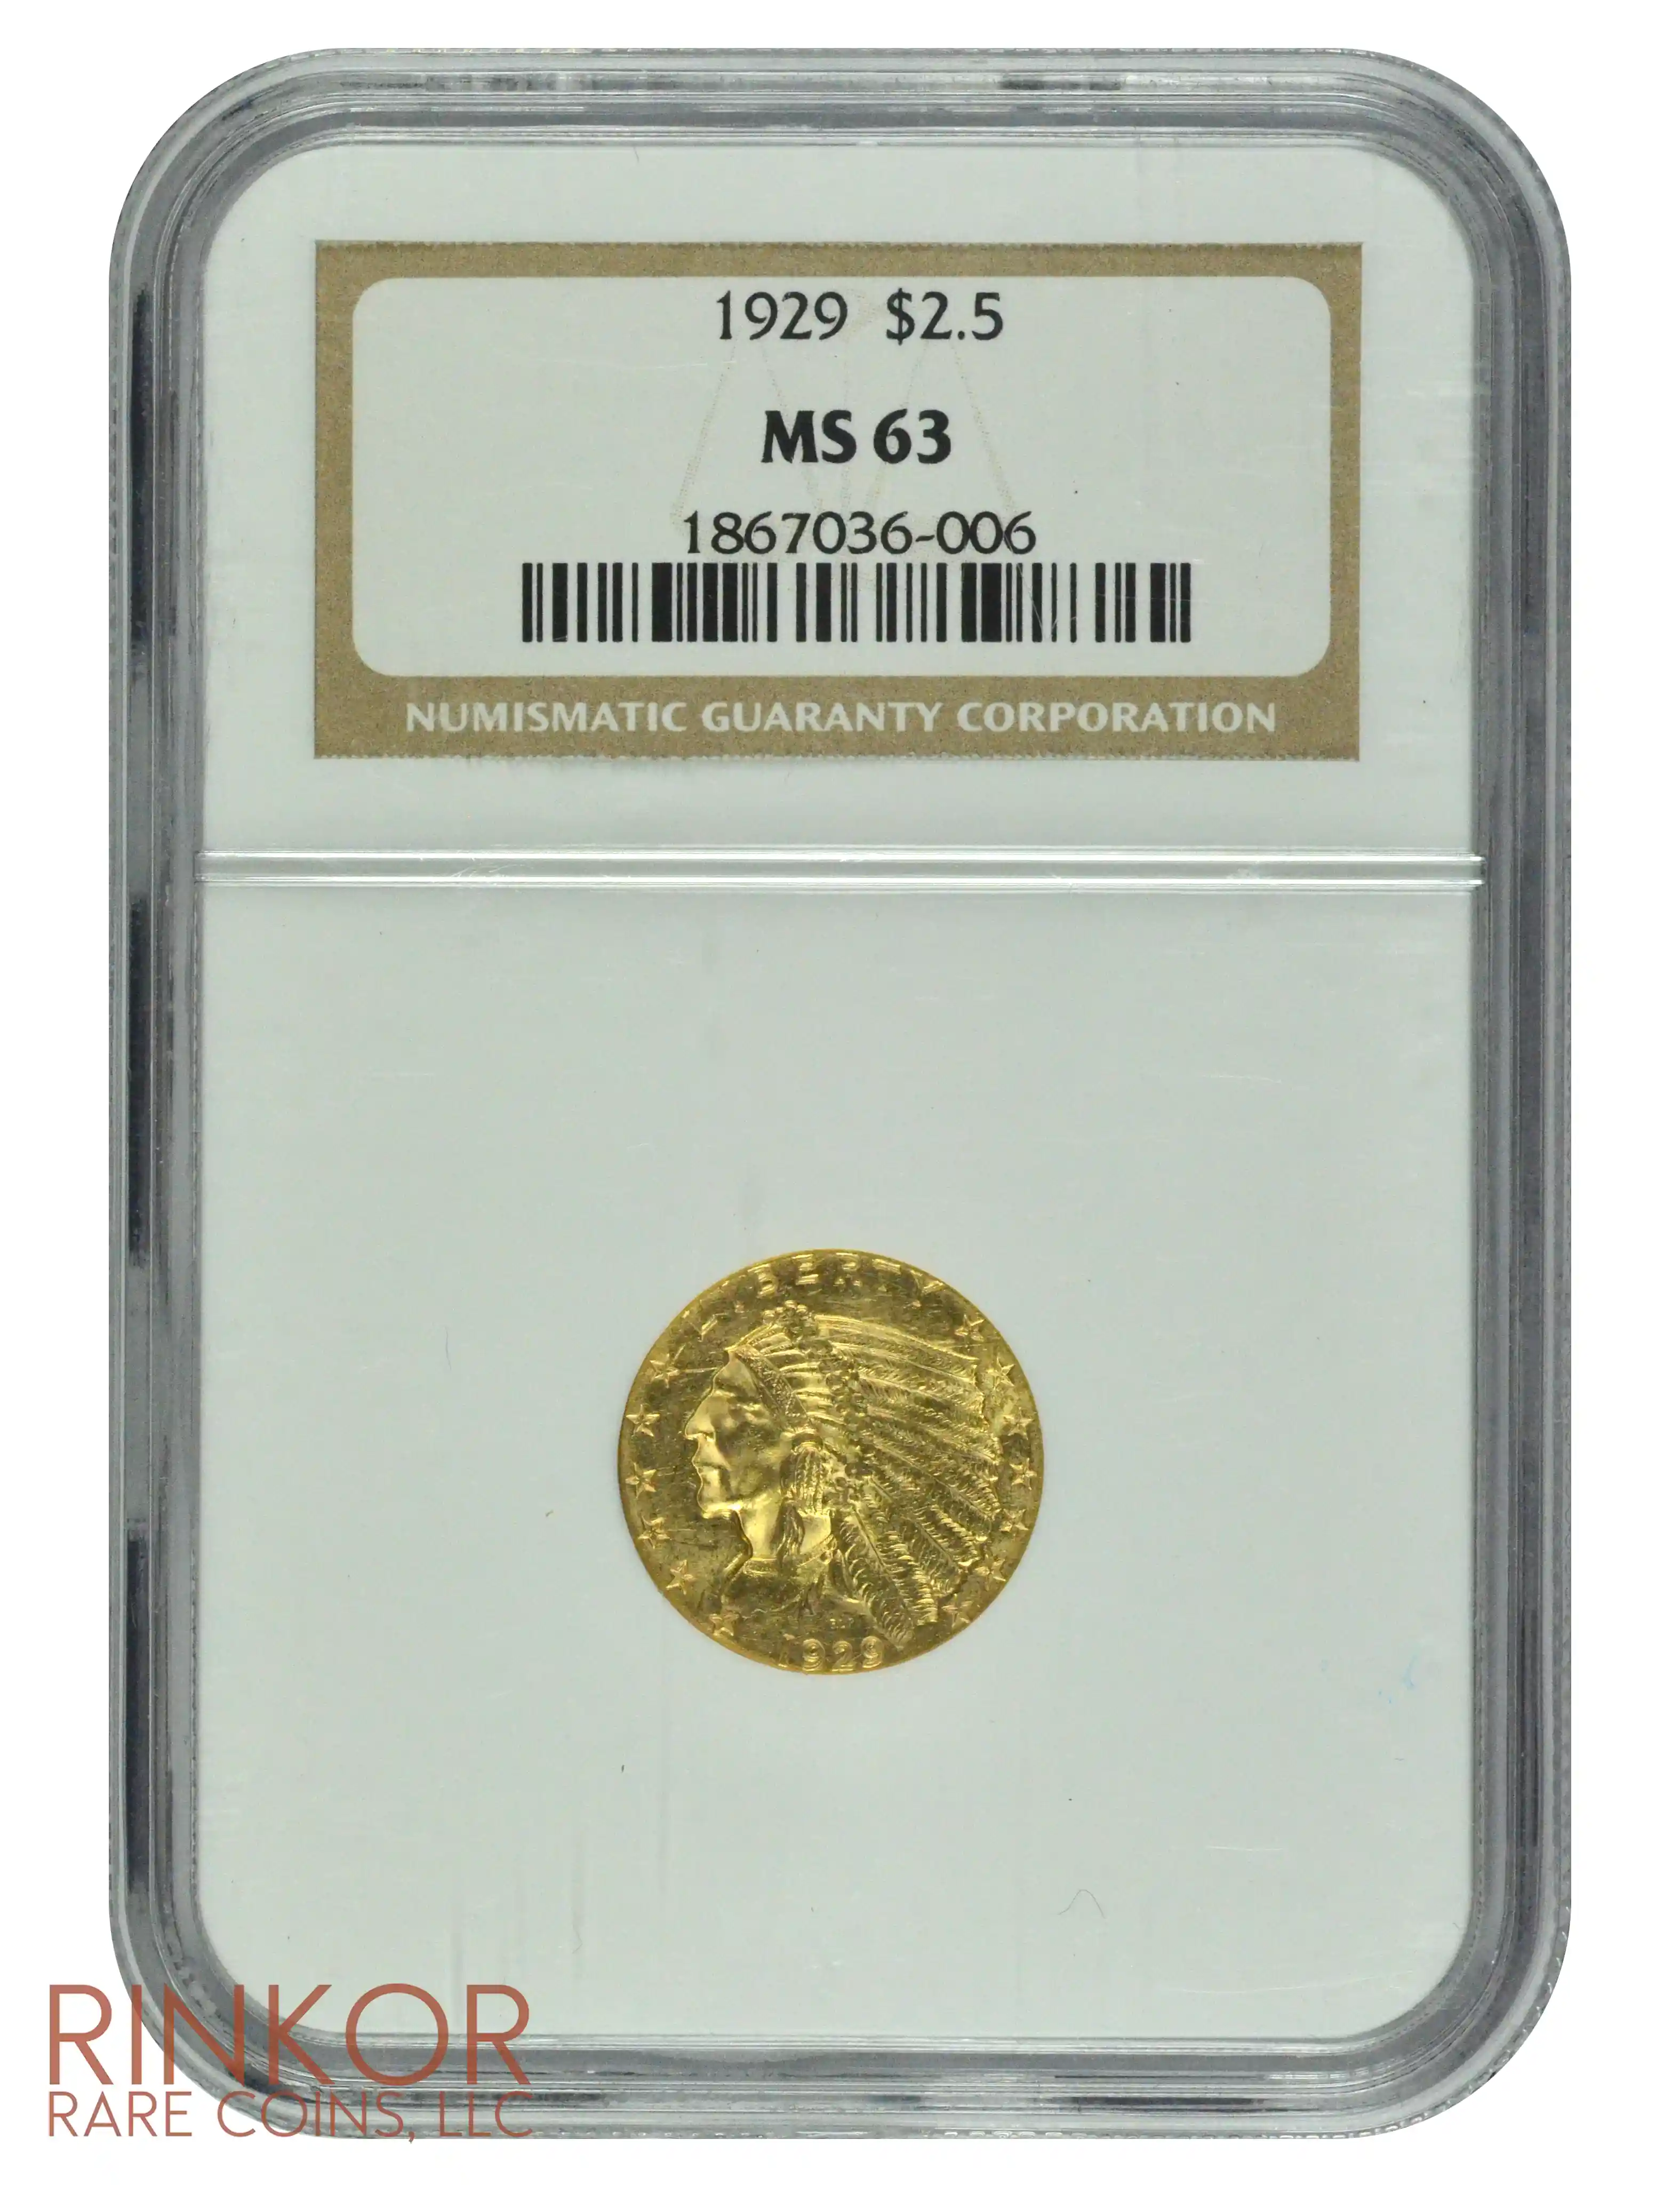 1929 $2.50 Indian Head NGC MS 63 